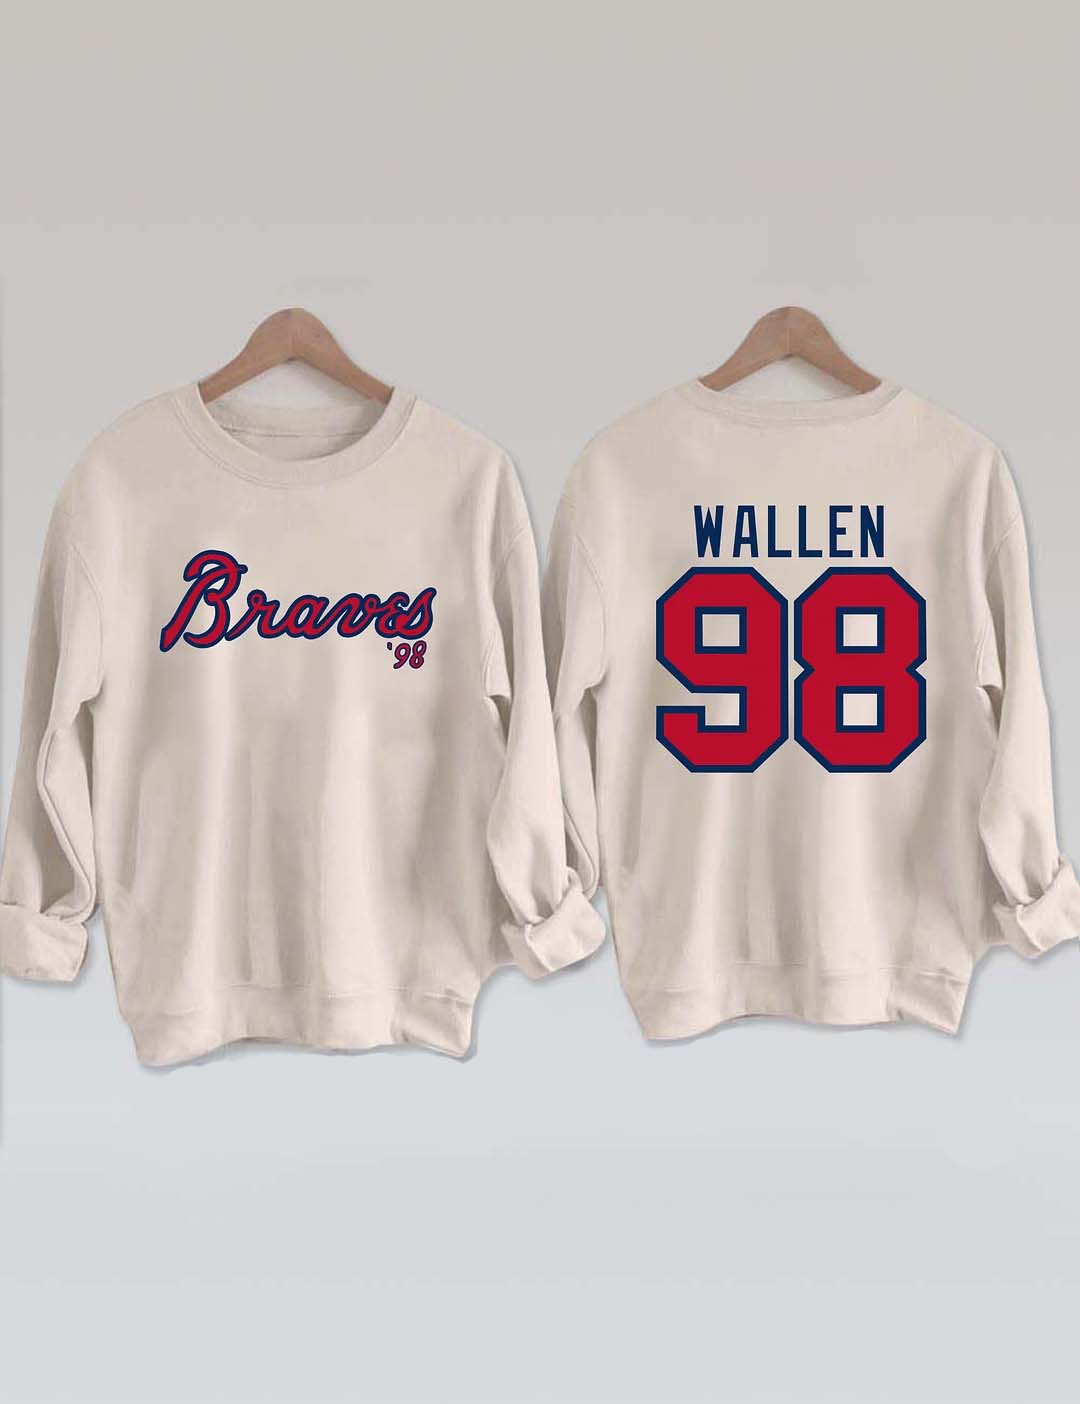 Wallen 98 Atlanta Braves Sweatshirt Shirt